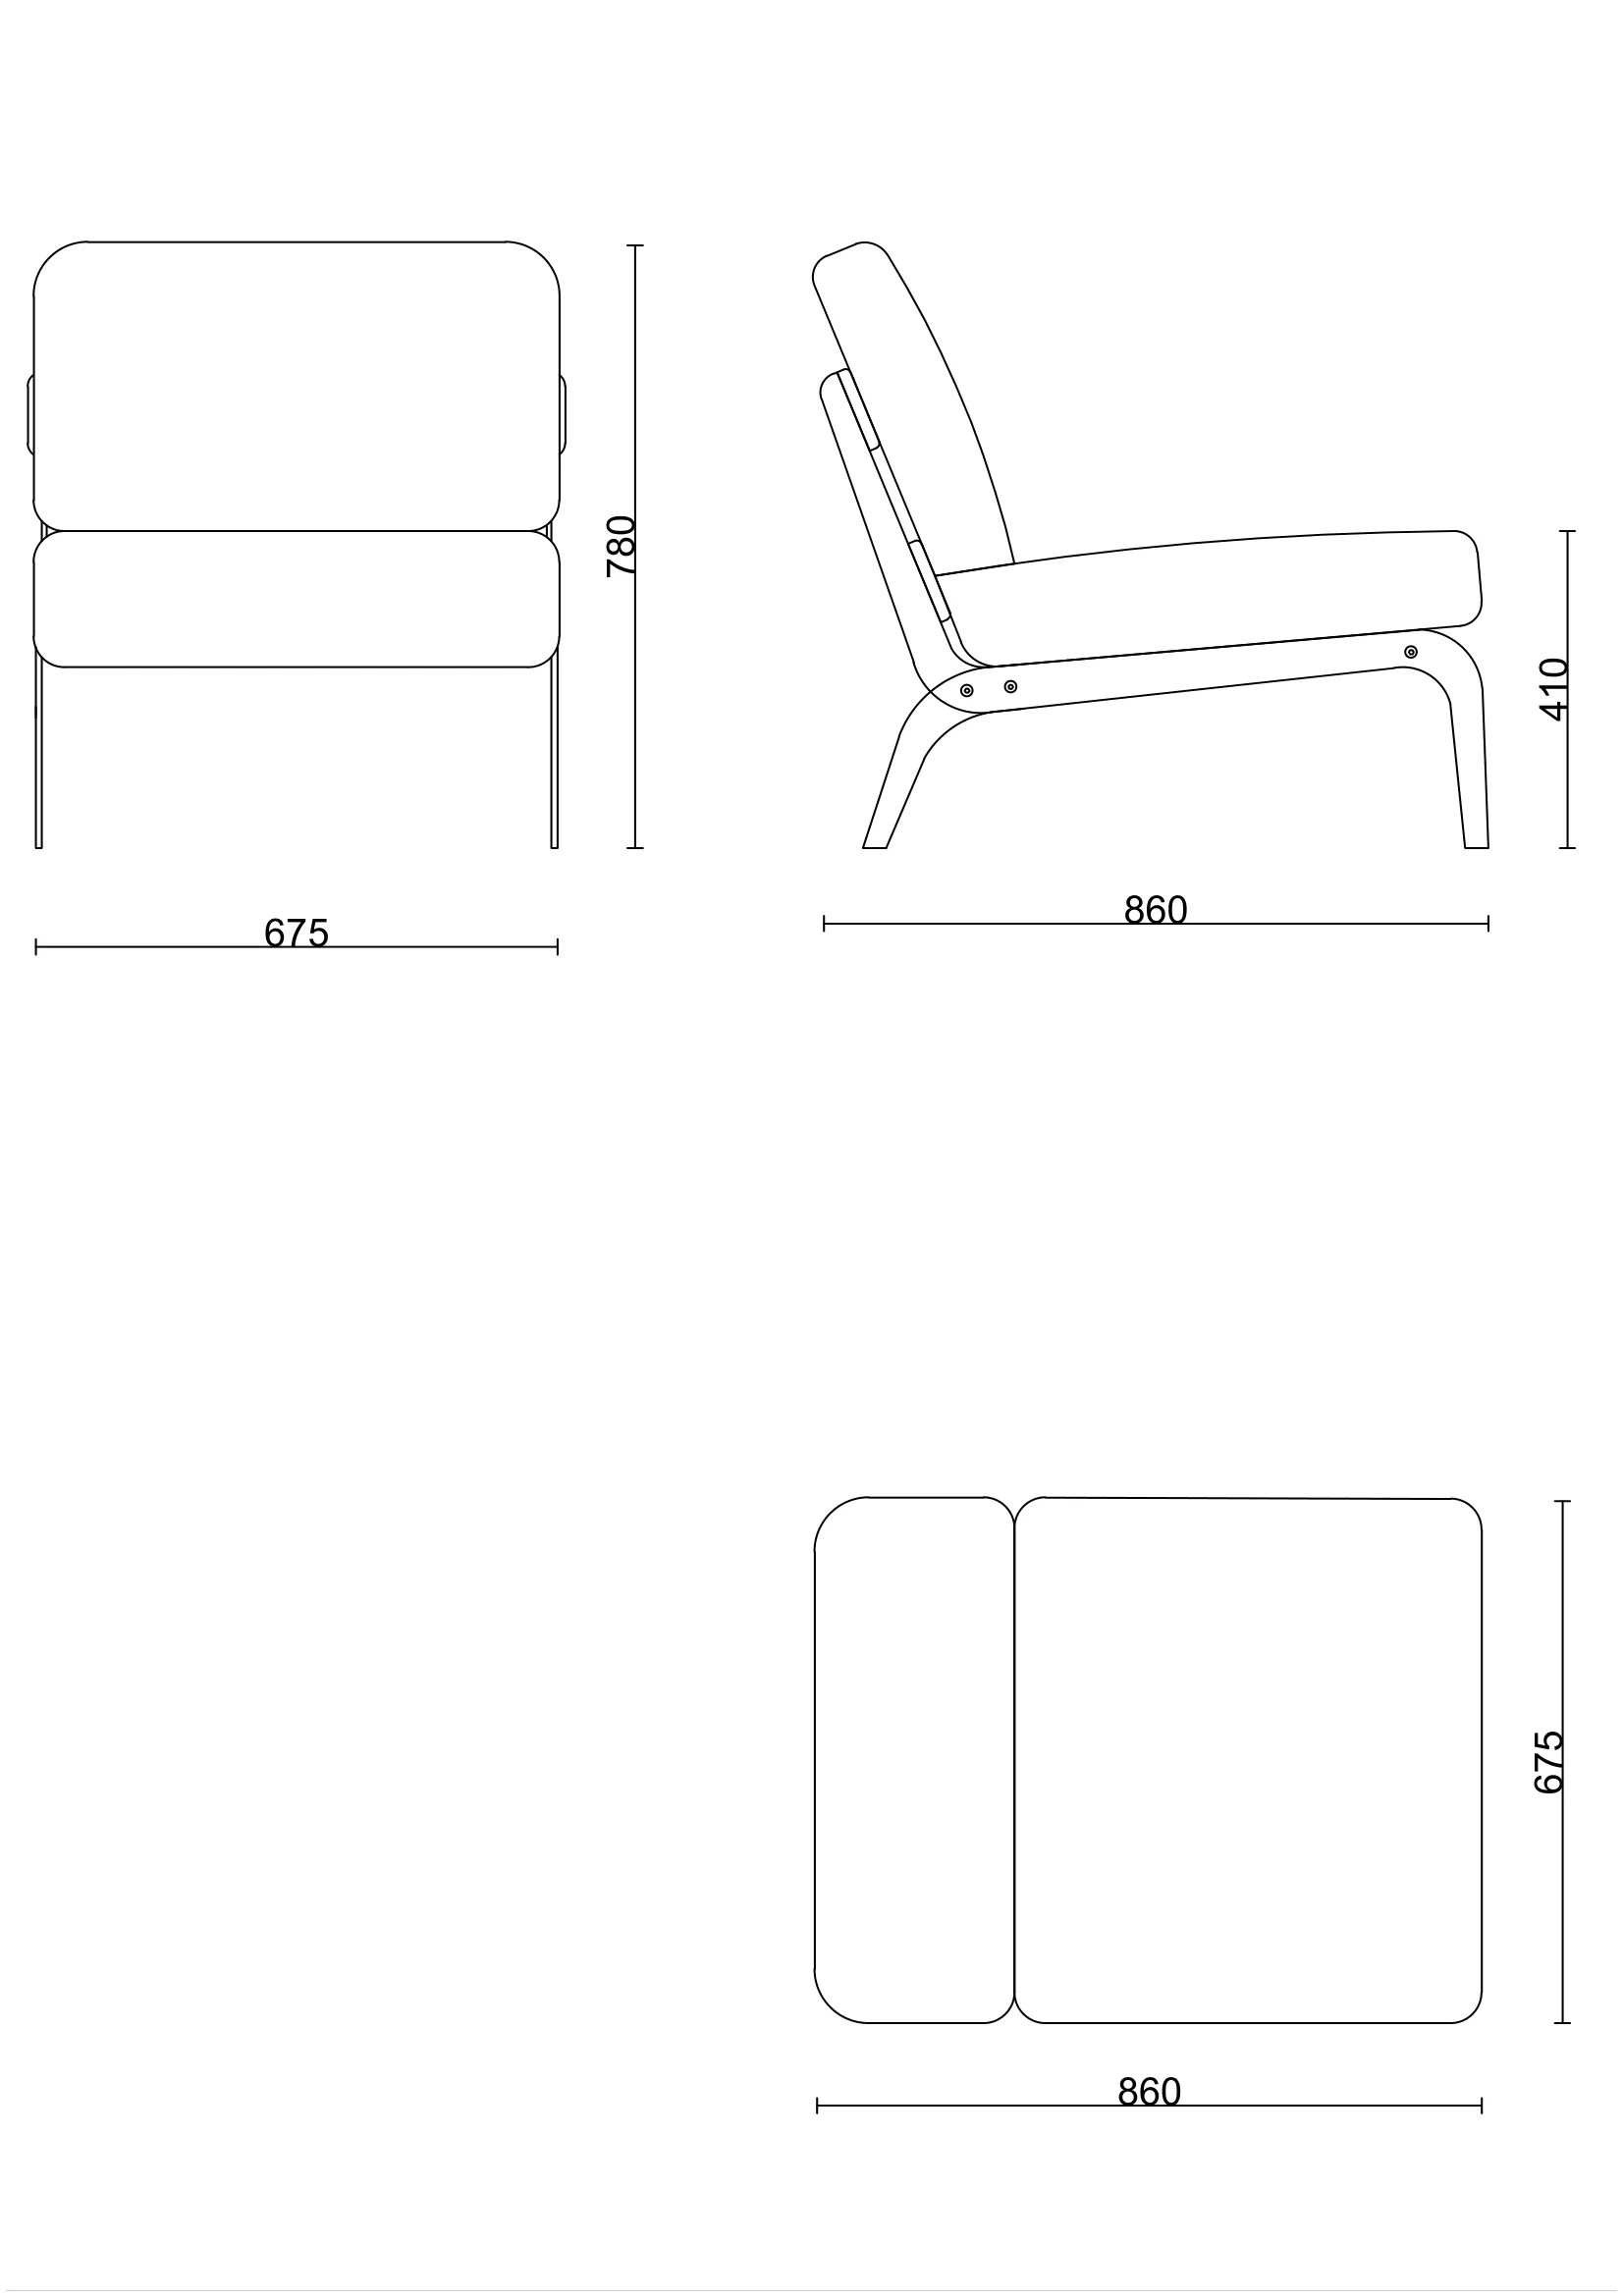 Coco - Rinocca (rinocca coco armchair blueprint)